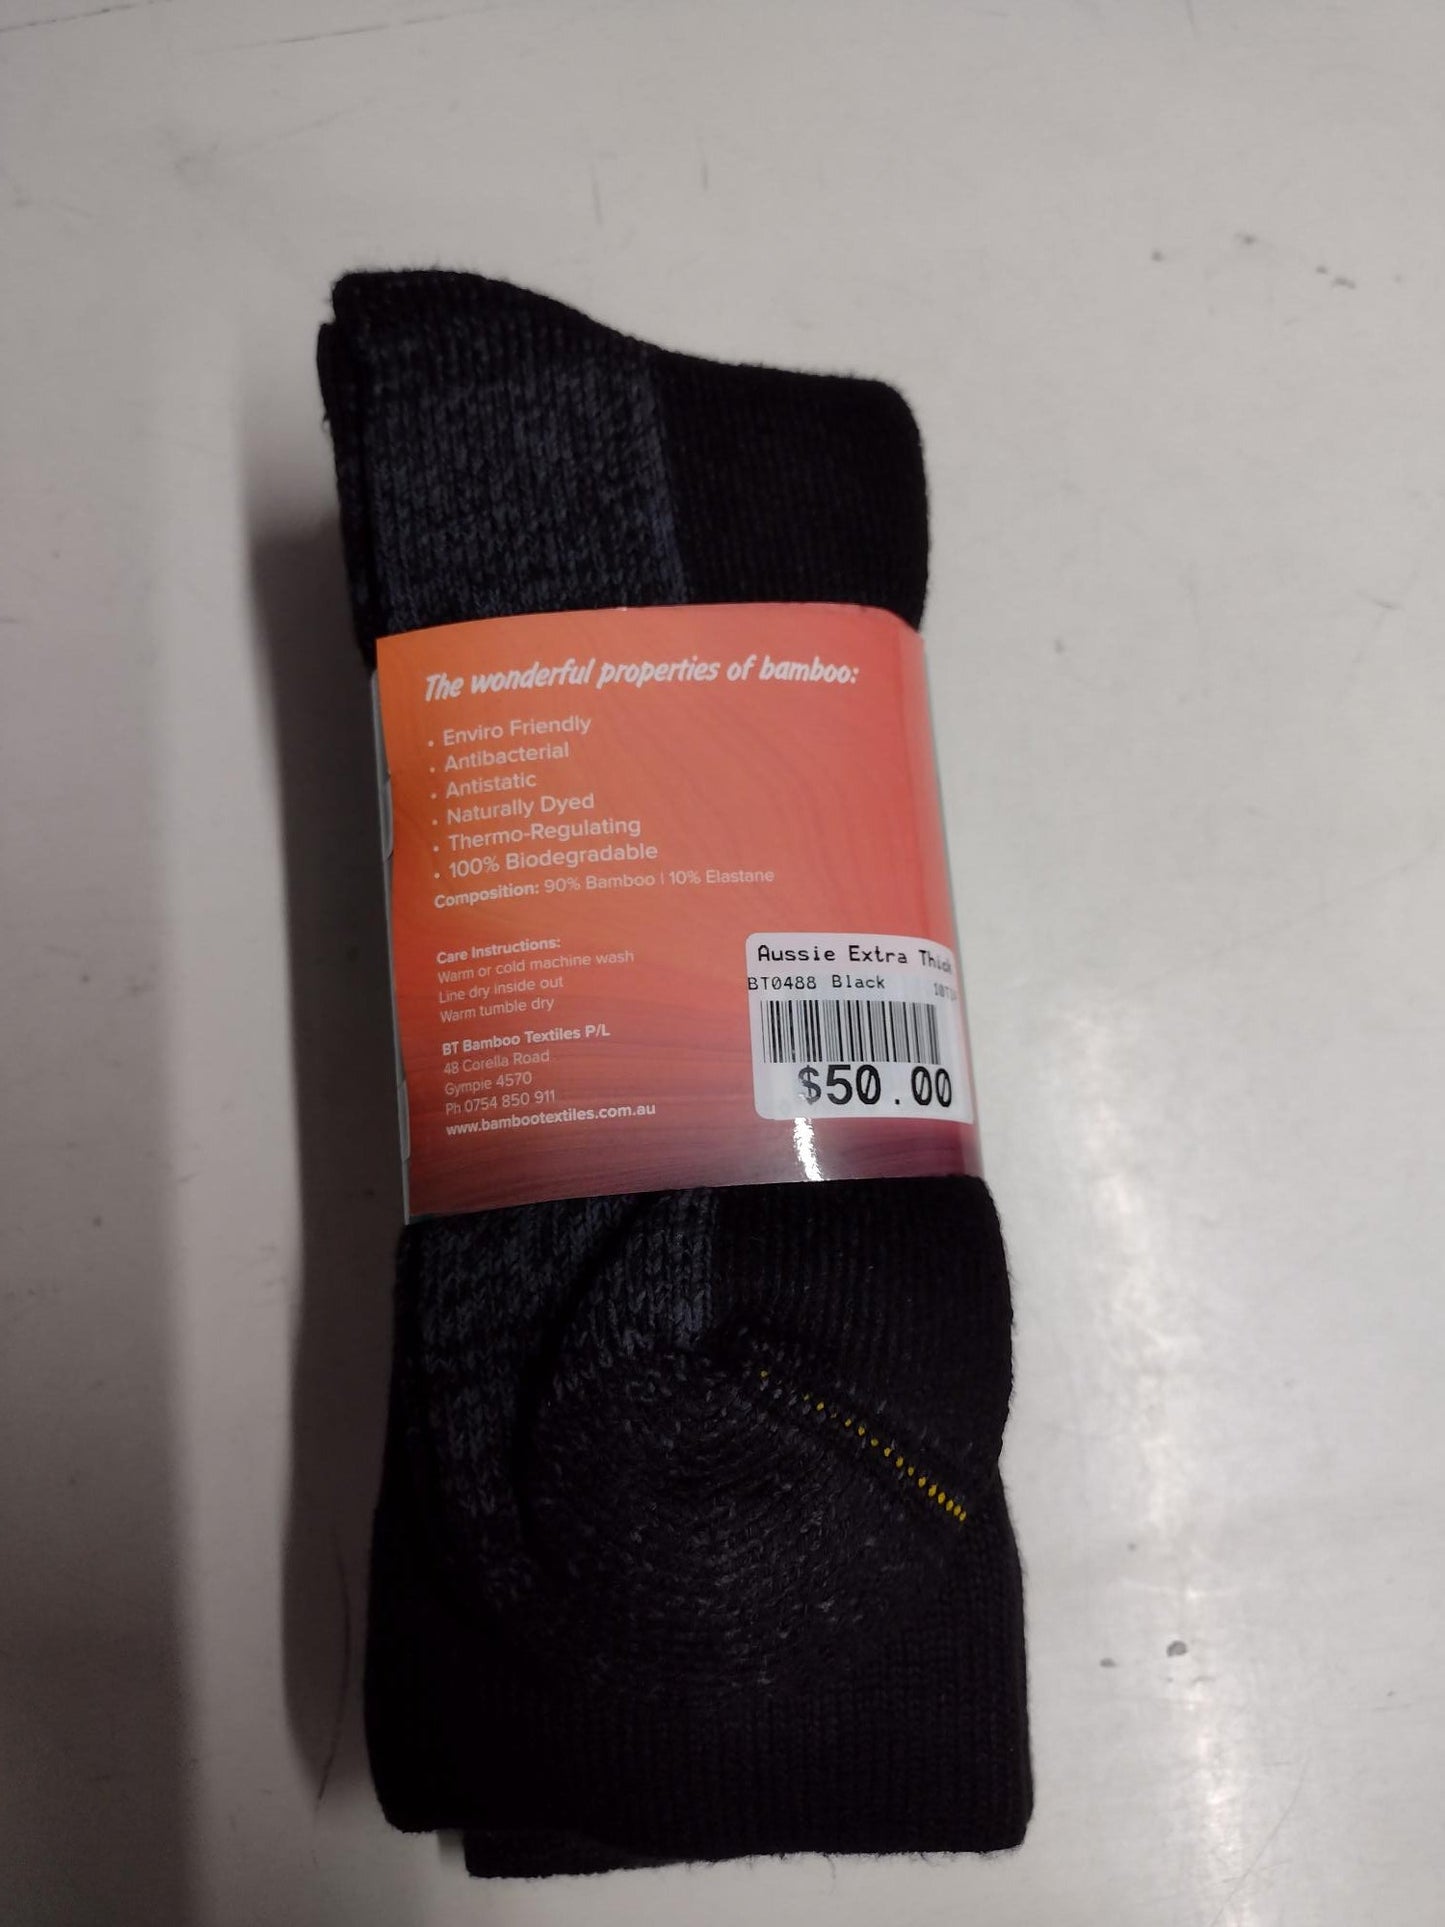 3 Pack Thick Bamboo Socks Australian Made Black Mens Socks by Bamboo Textiles | The Bloke Shop